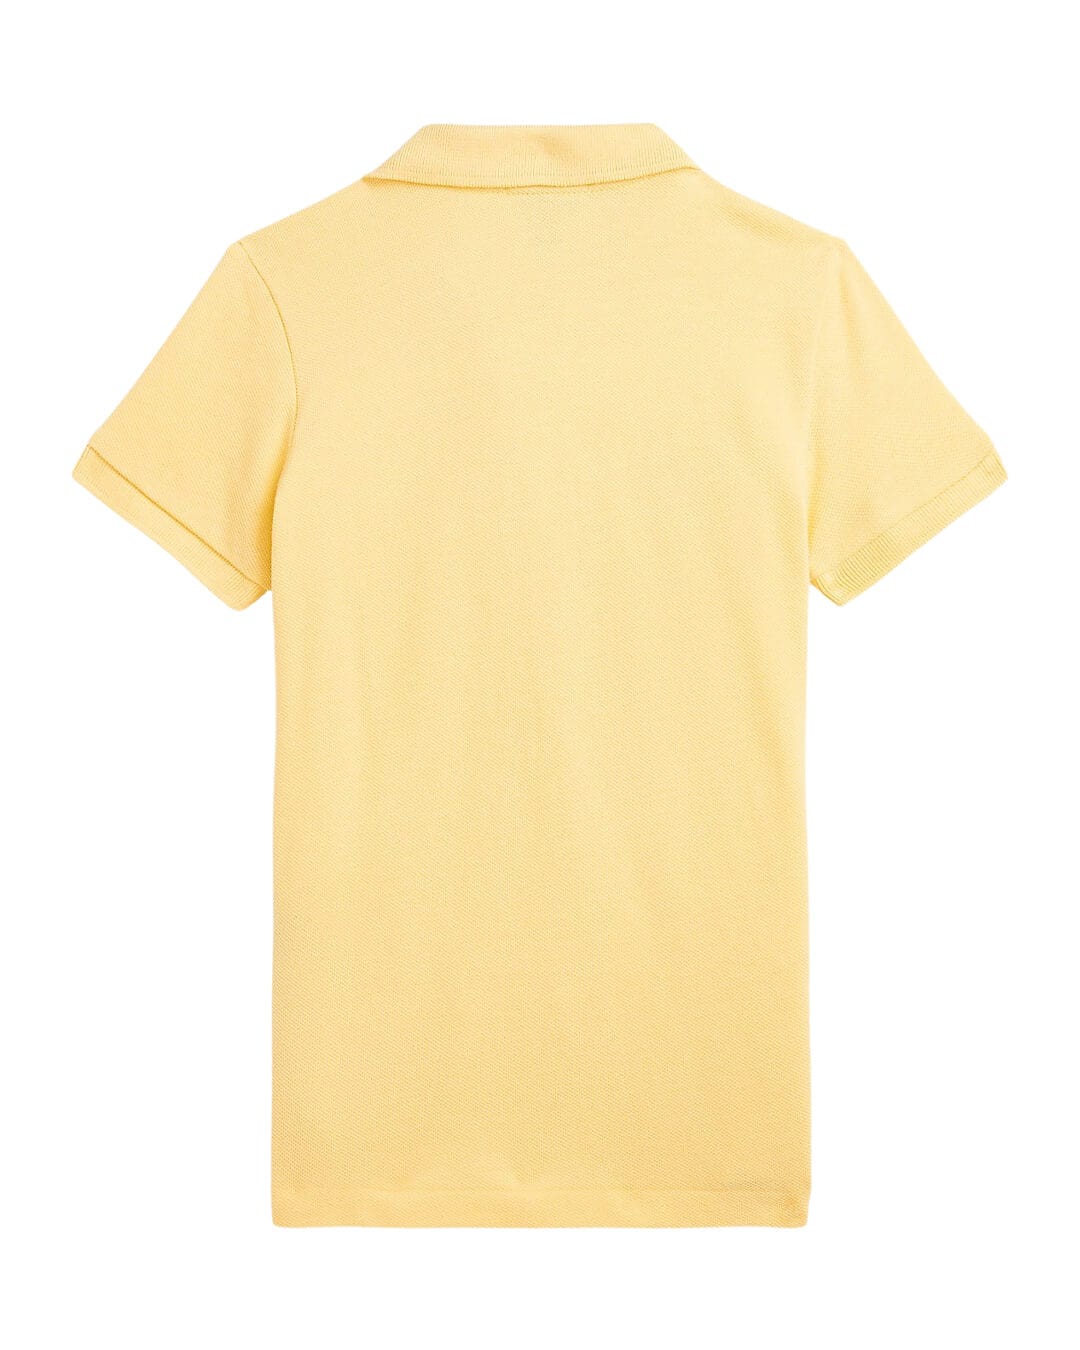 Polo Ralph Lauren Polo Shirts Boys Polo Ralph Lauren The Iconic Yellow Mesh Polo Shirt